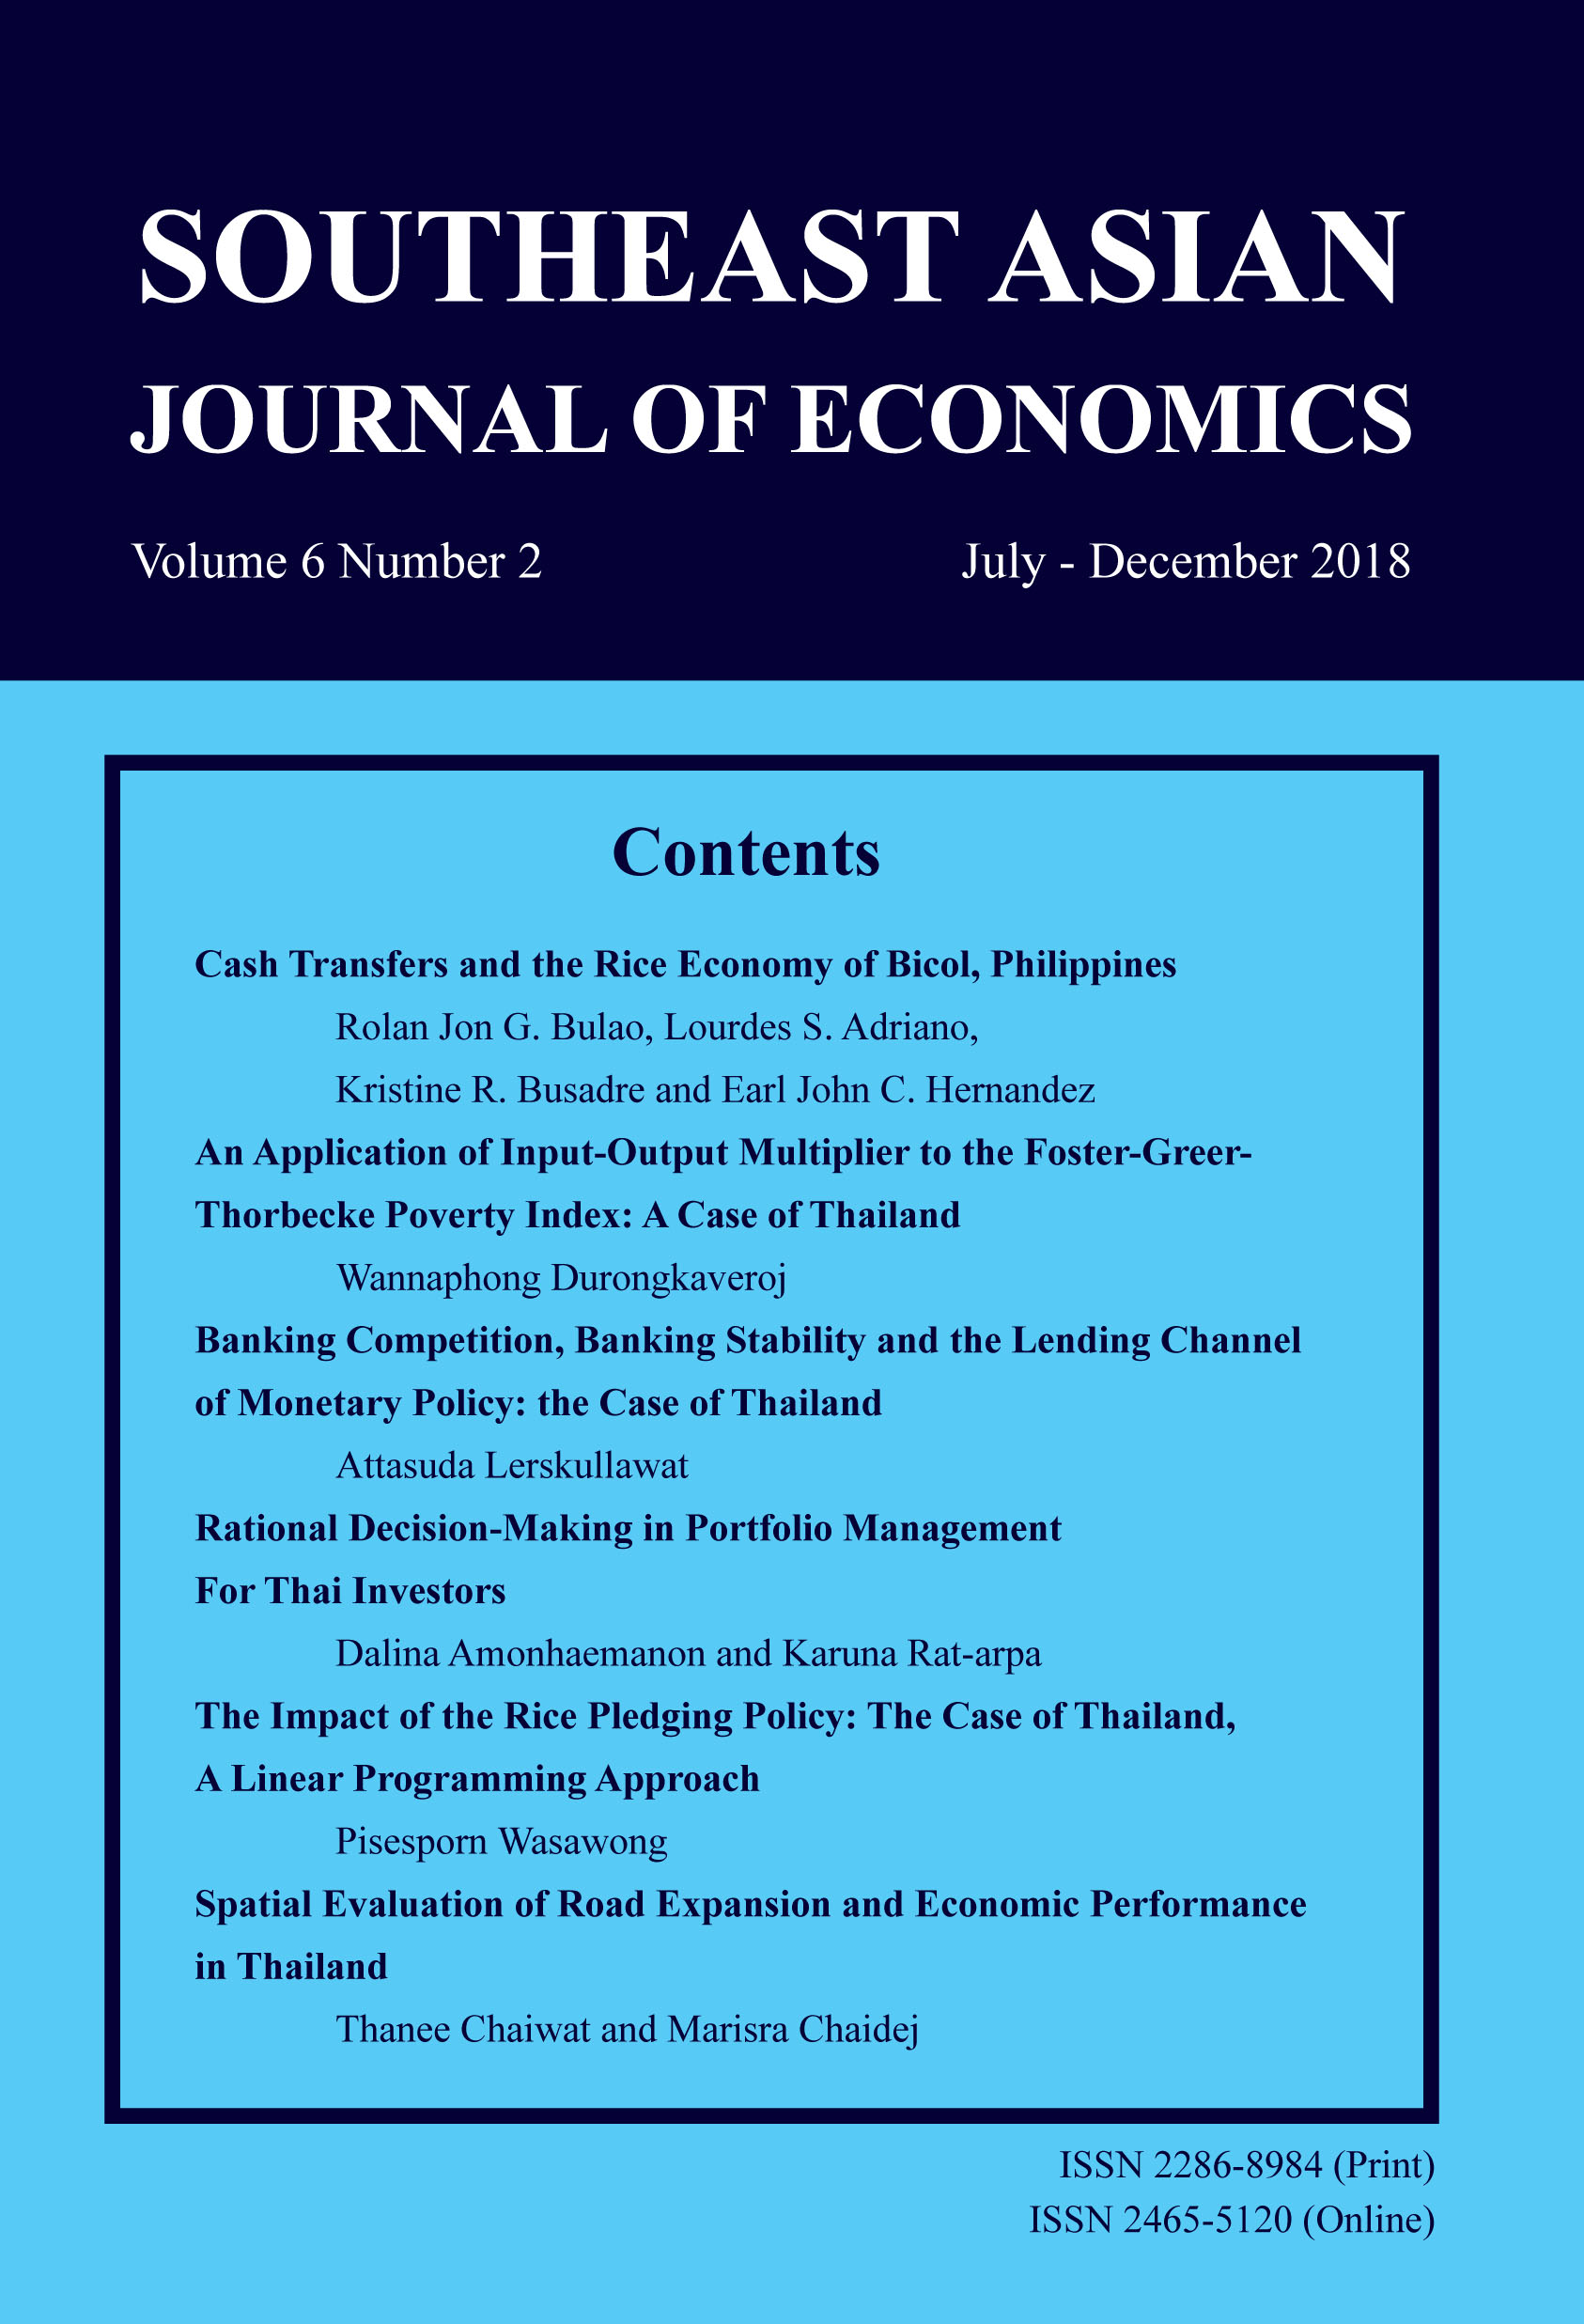 					View Southeast Asian Journal of Economics, Vol. 7 No. 1 (January - June 2019)
				